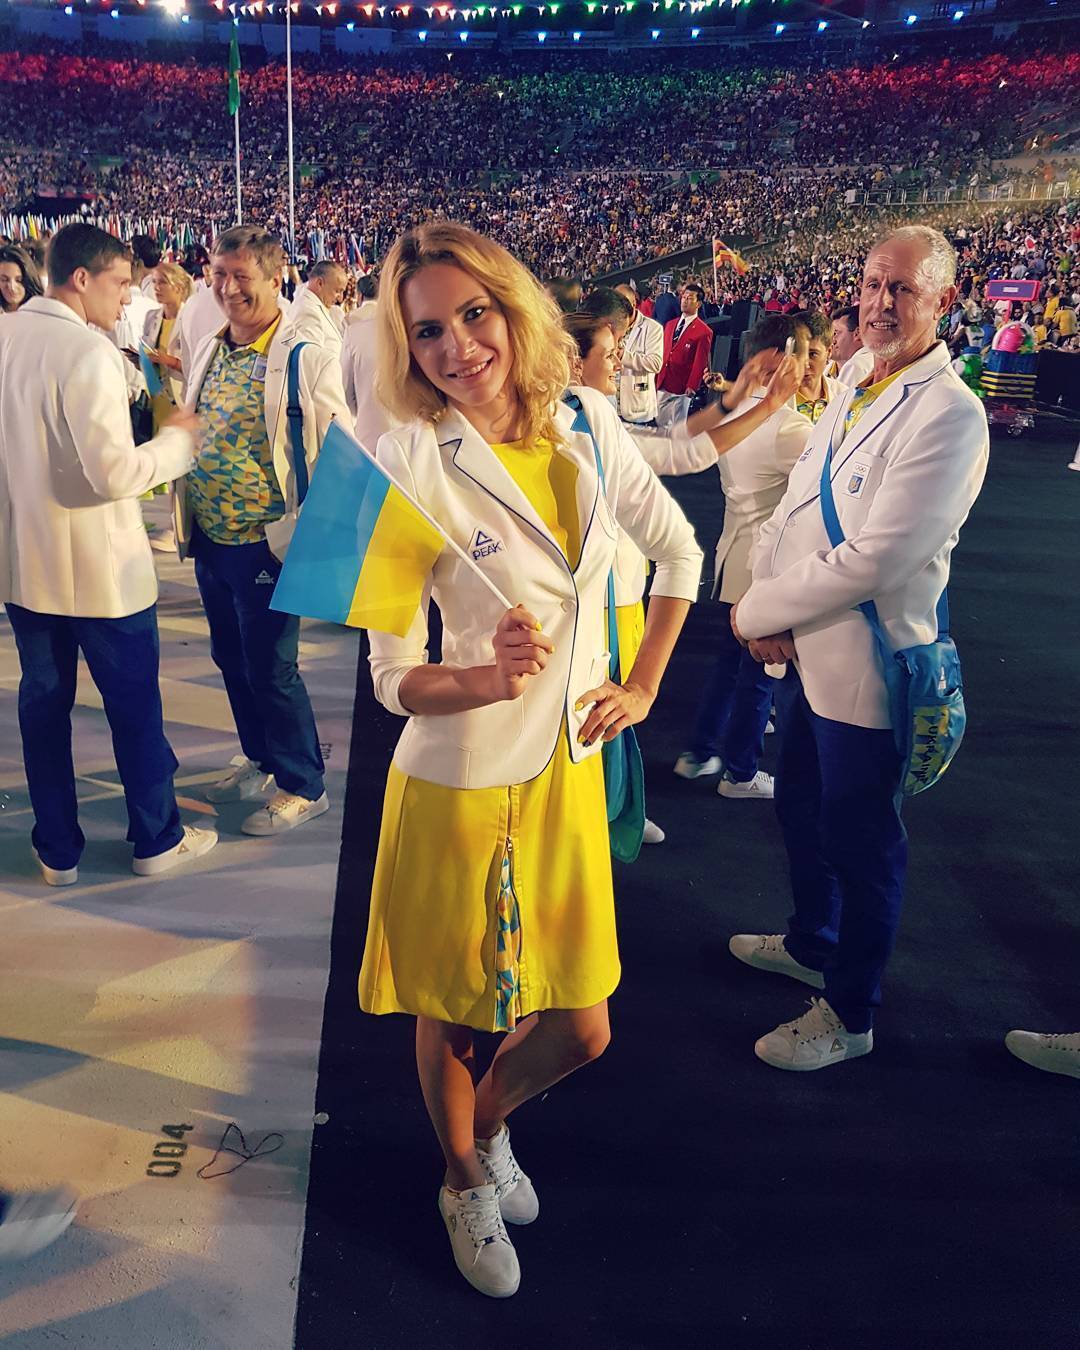 Знаменита українська легкоатлетка знялася в купальнику, вразивши "суперфігурою"